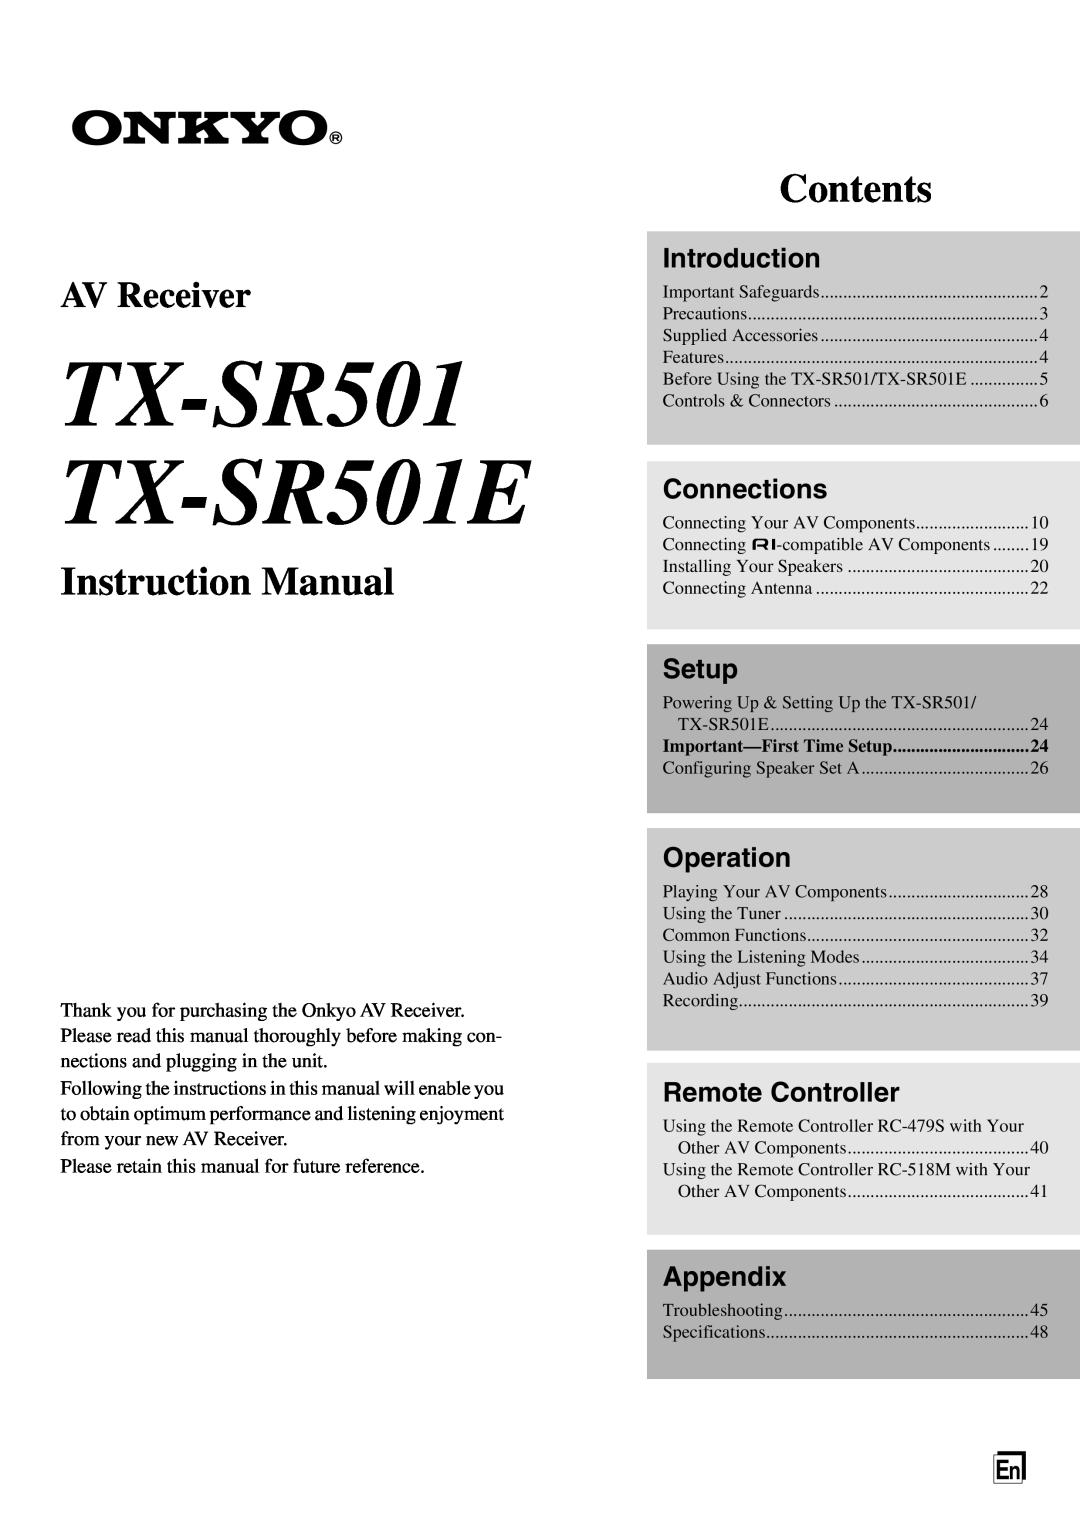 Onkyo instruction manual TX-SR501 TX-SR501E, Contents, AV Receiver, Introduction, Connections, Setup, Operation 